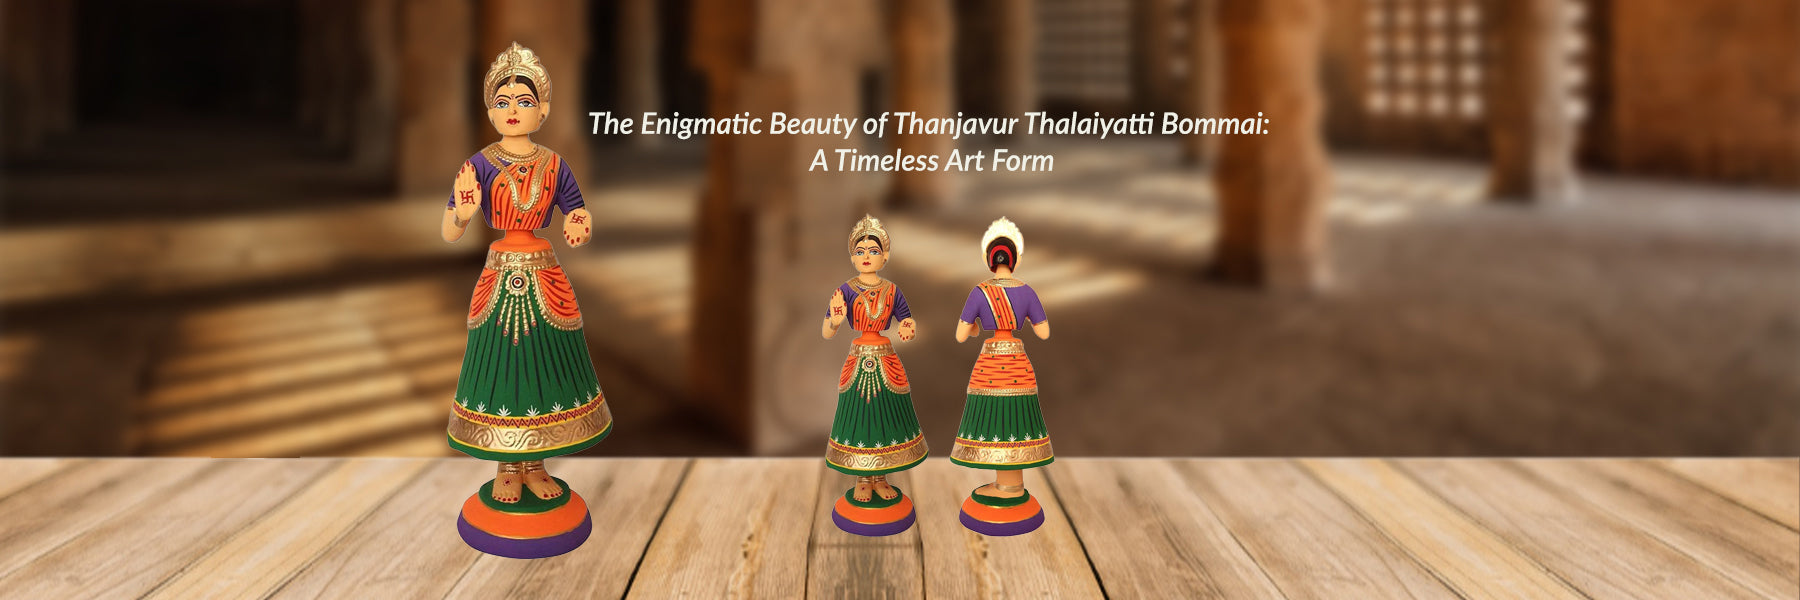 The Enigmatic Beauty of Thanjavur Thalaiyatti Bommai: A Timeless Art Form FromIndia.com